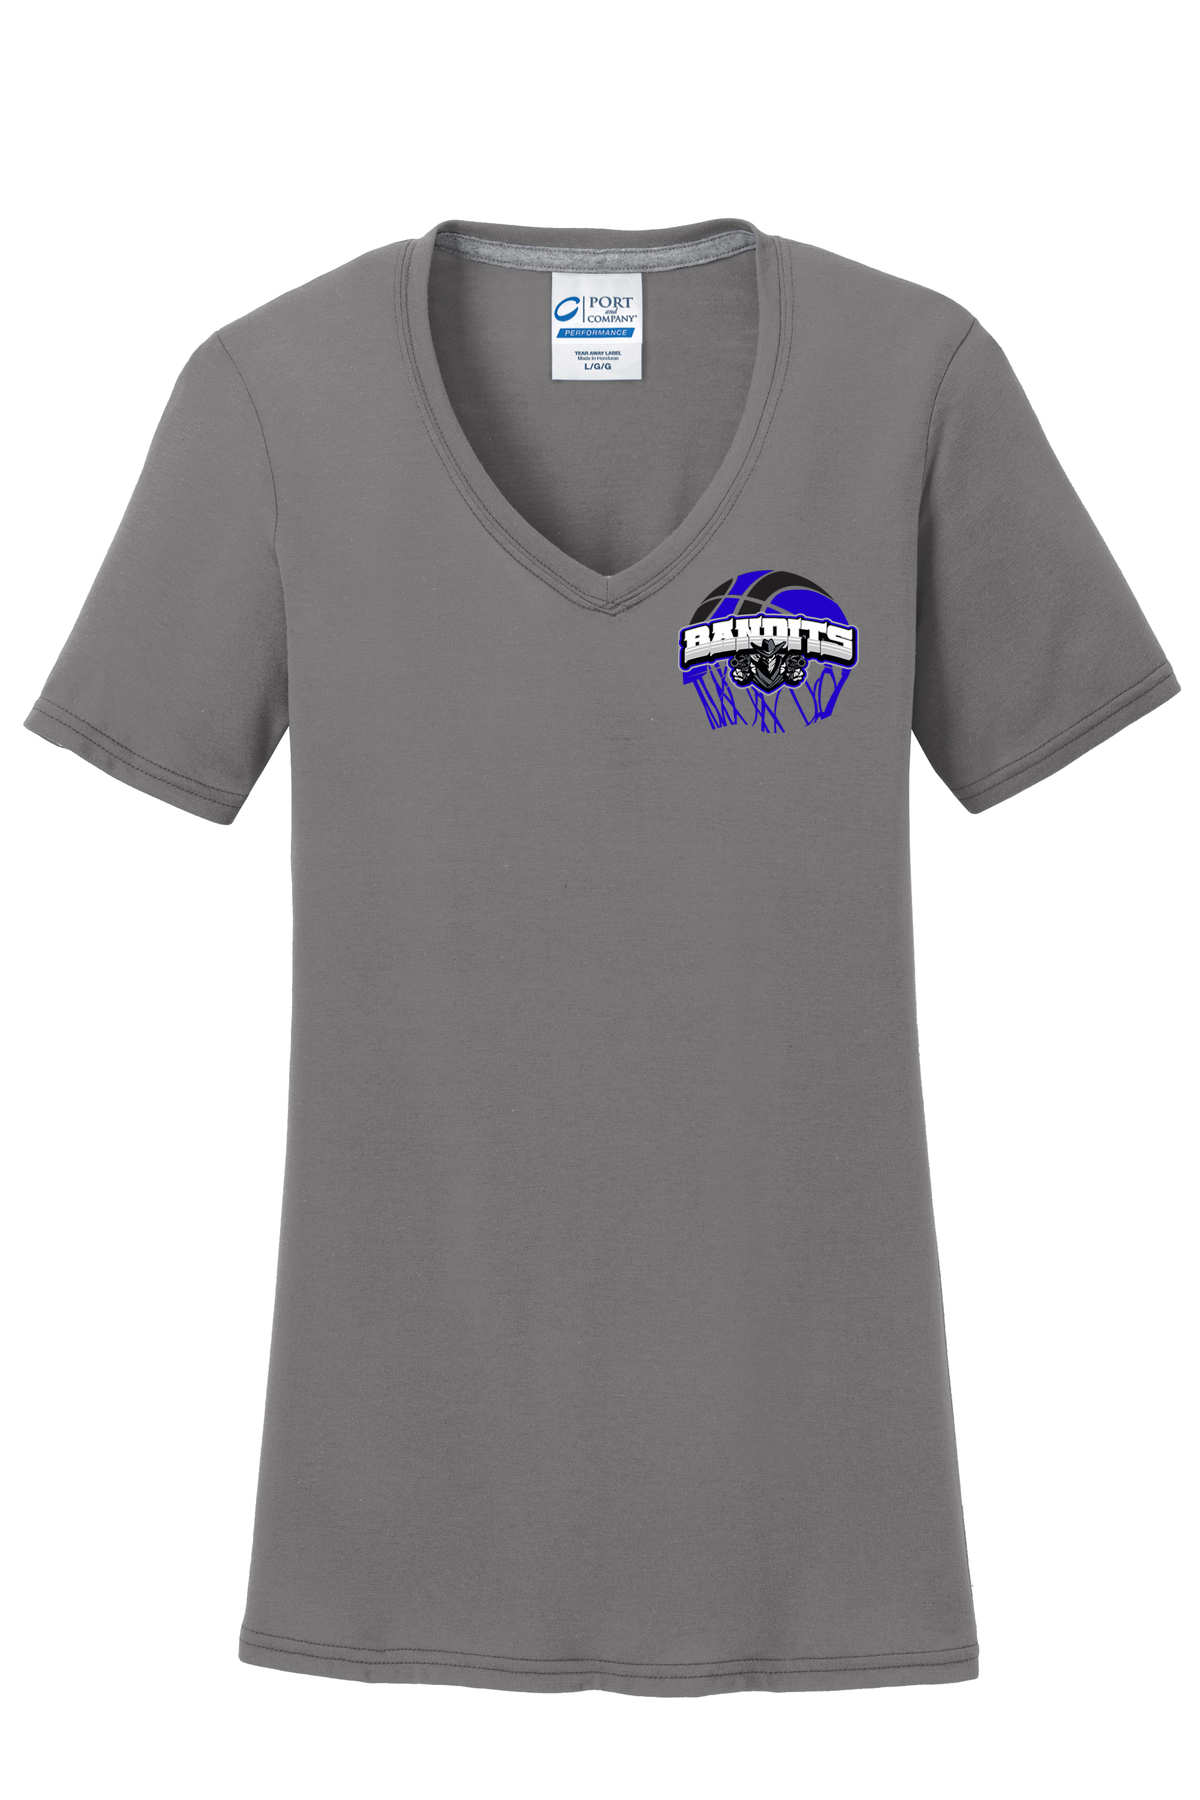 Capital City Bandits Basketball Women's T-Shirt